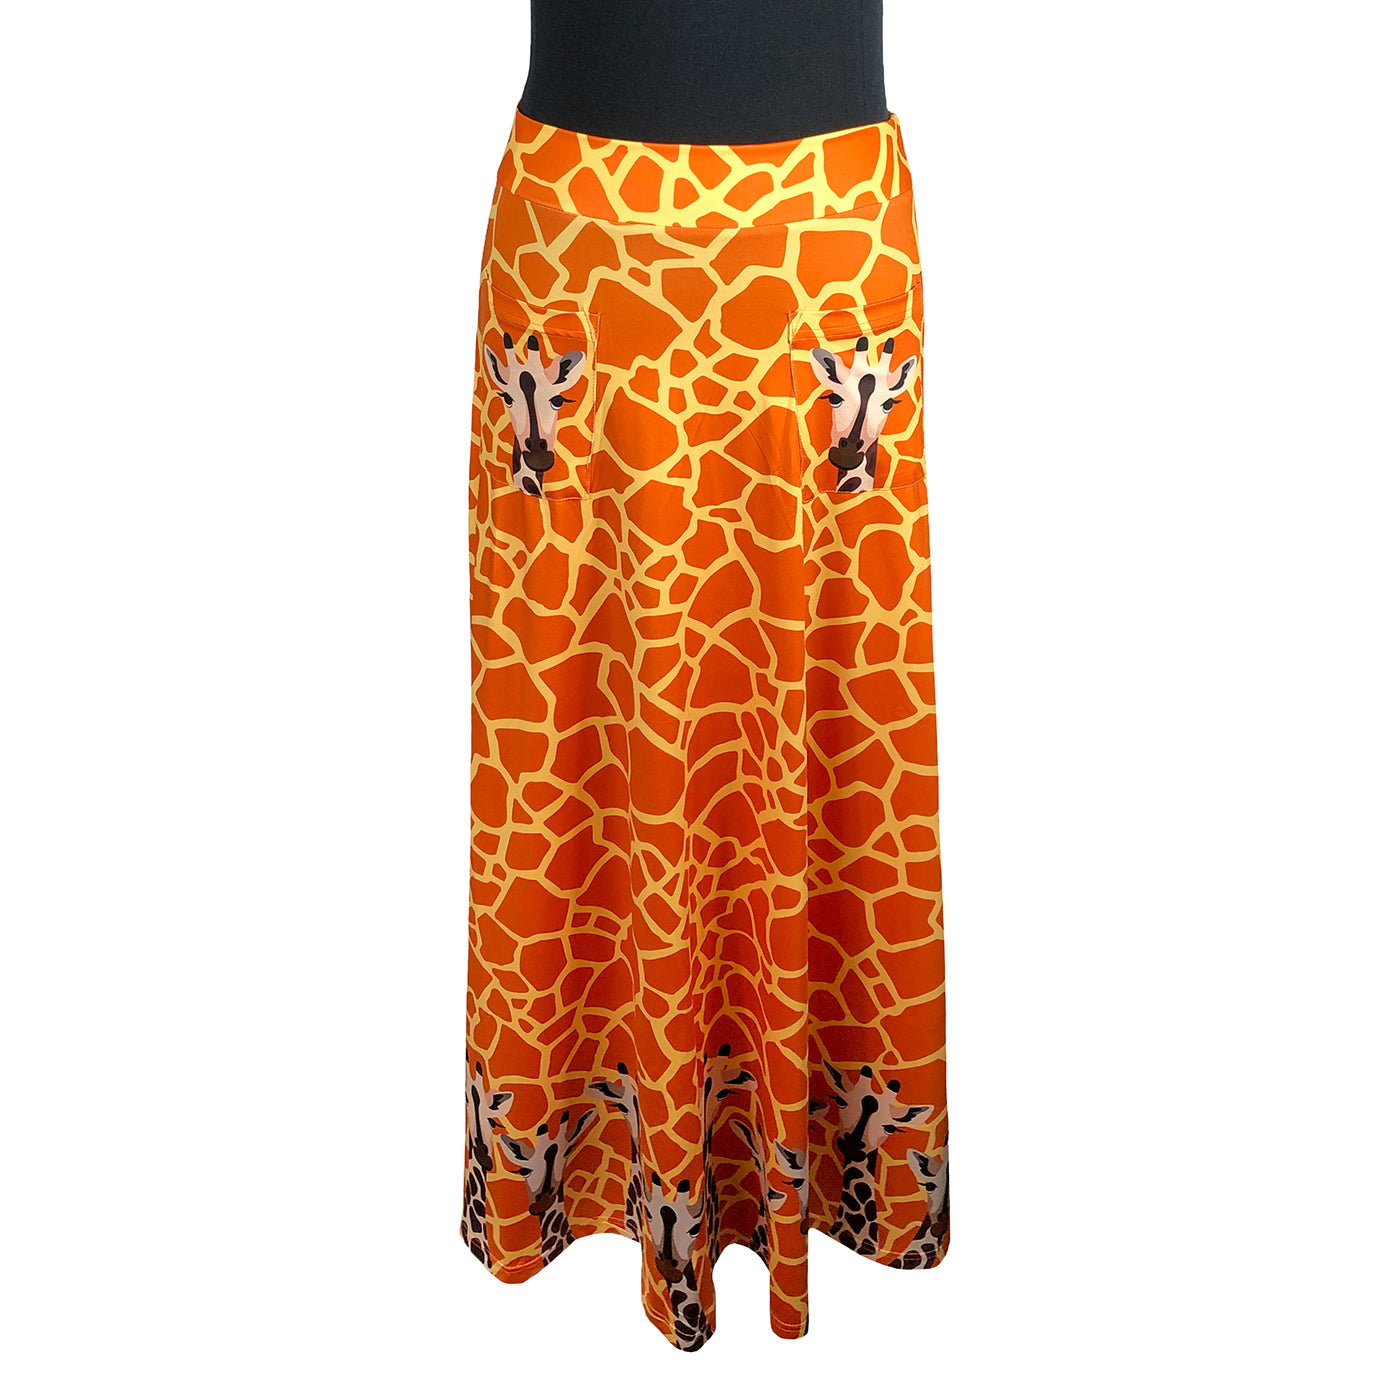 Andy Maxi Skirt by RainbowsAndFairies.com.au (Giraffe - Animal Print - Safari - Skirt With Pockets - Boho - Mod Retro - Vintage Inspired) - SKU: CL_MAXIS_ANDYG_ORG - Pic-01